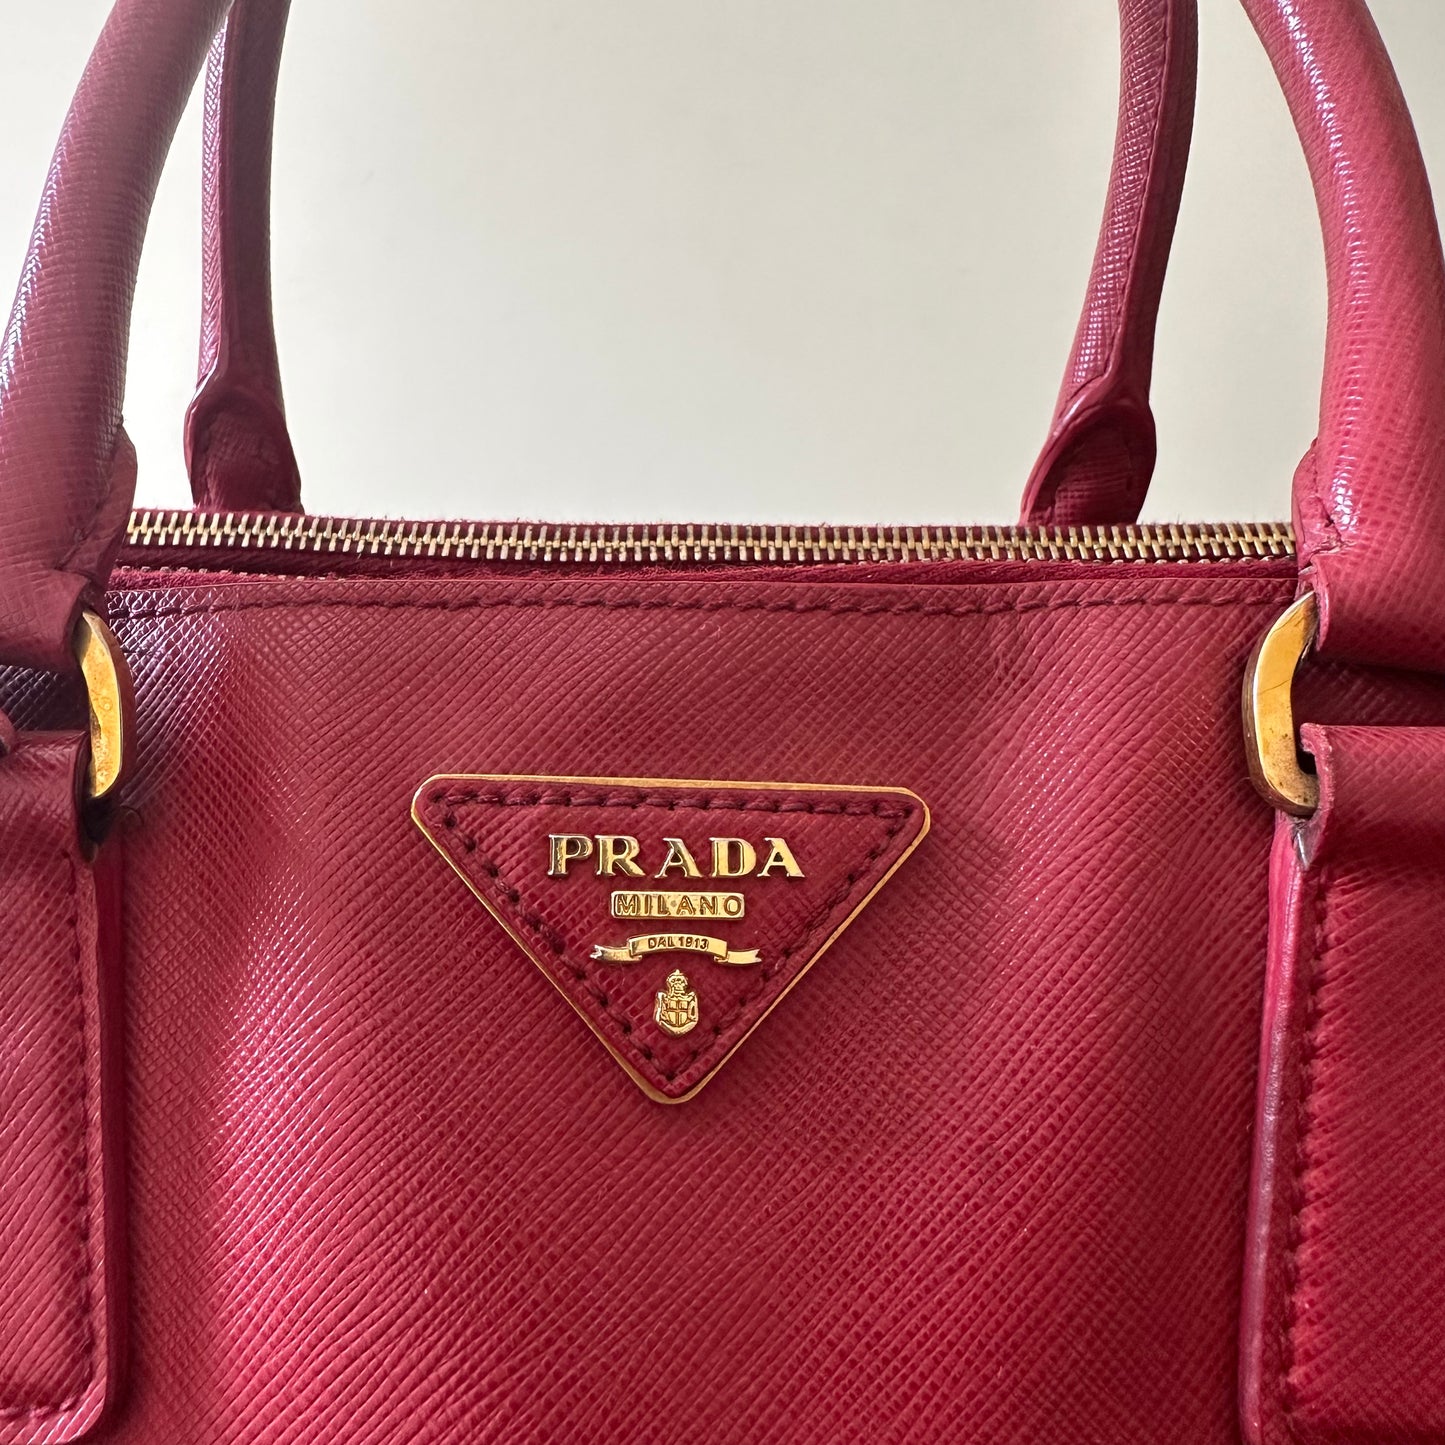 Prada - Galleria Large Saffiano Leather Tote